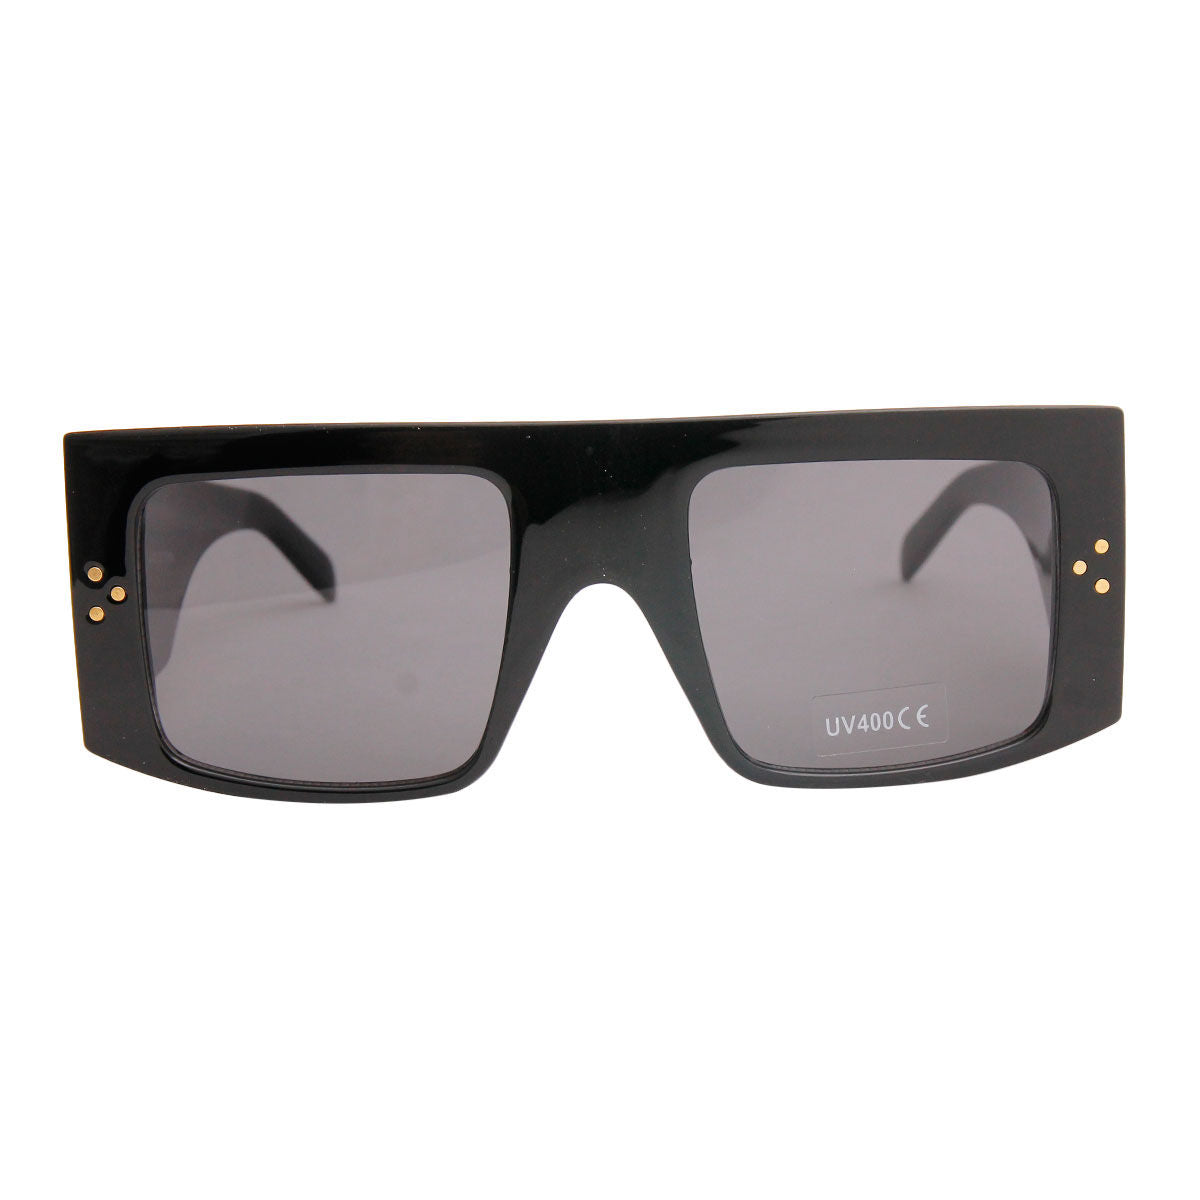 Black Extra Wide Celine Inspired Sunglasses